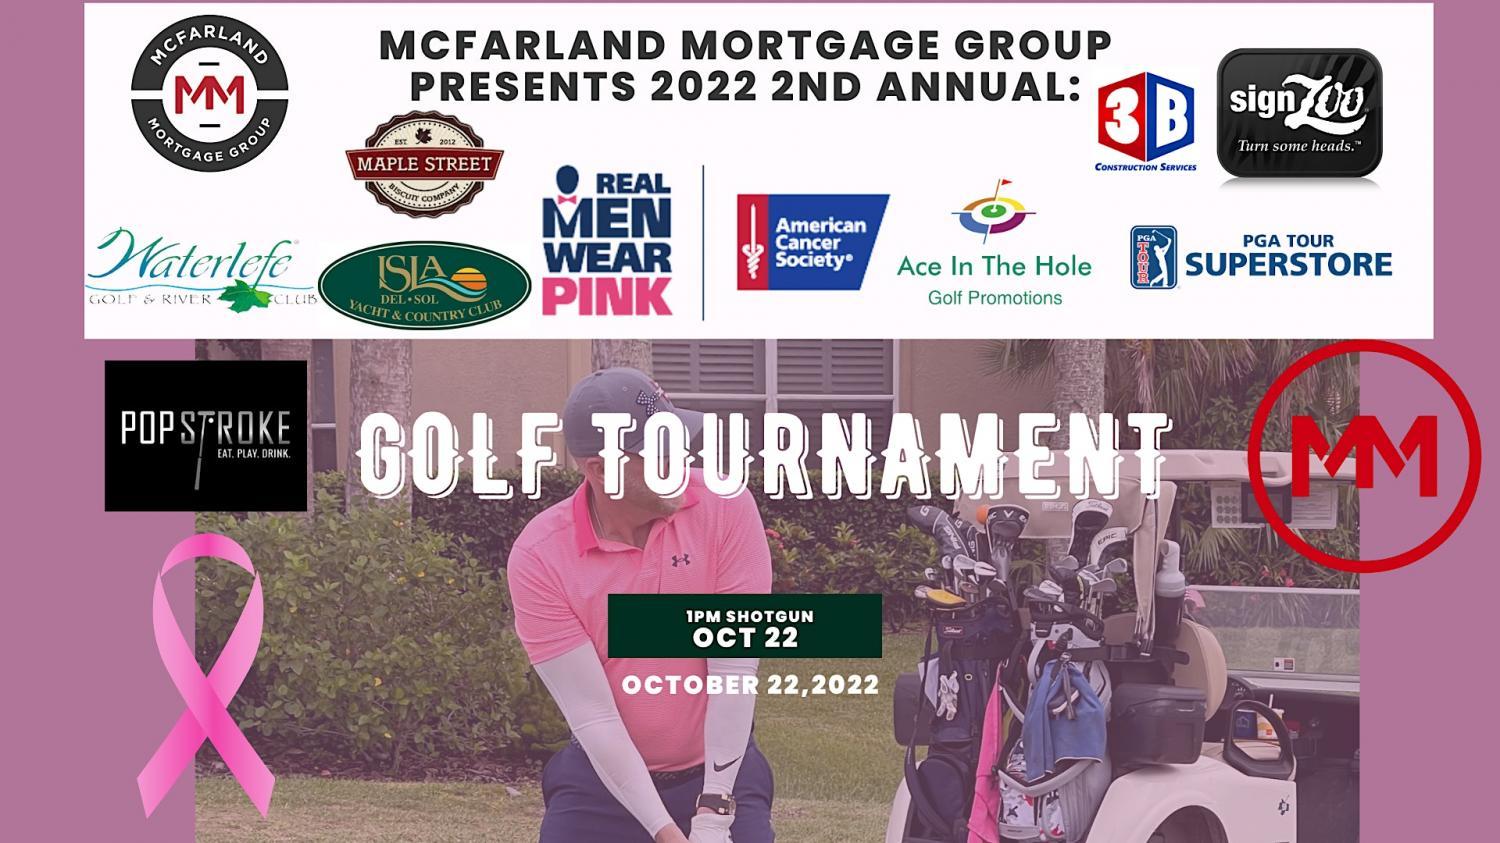 2022 Real Men Wear Pink Golf Tournament
Sat Oct 22, 7:00 PM - Sat Oct 22, 7:00 PM
in 2 days